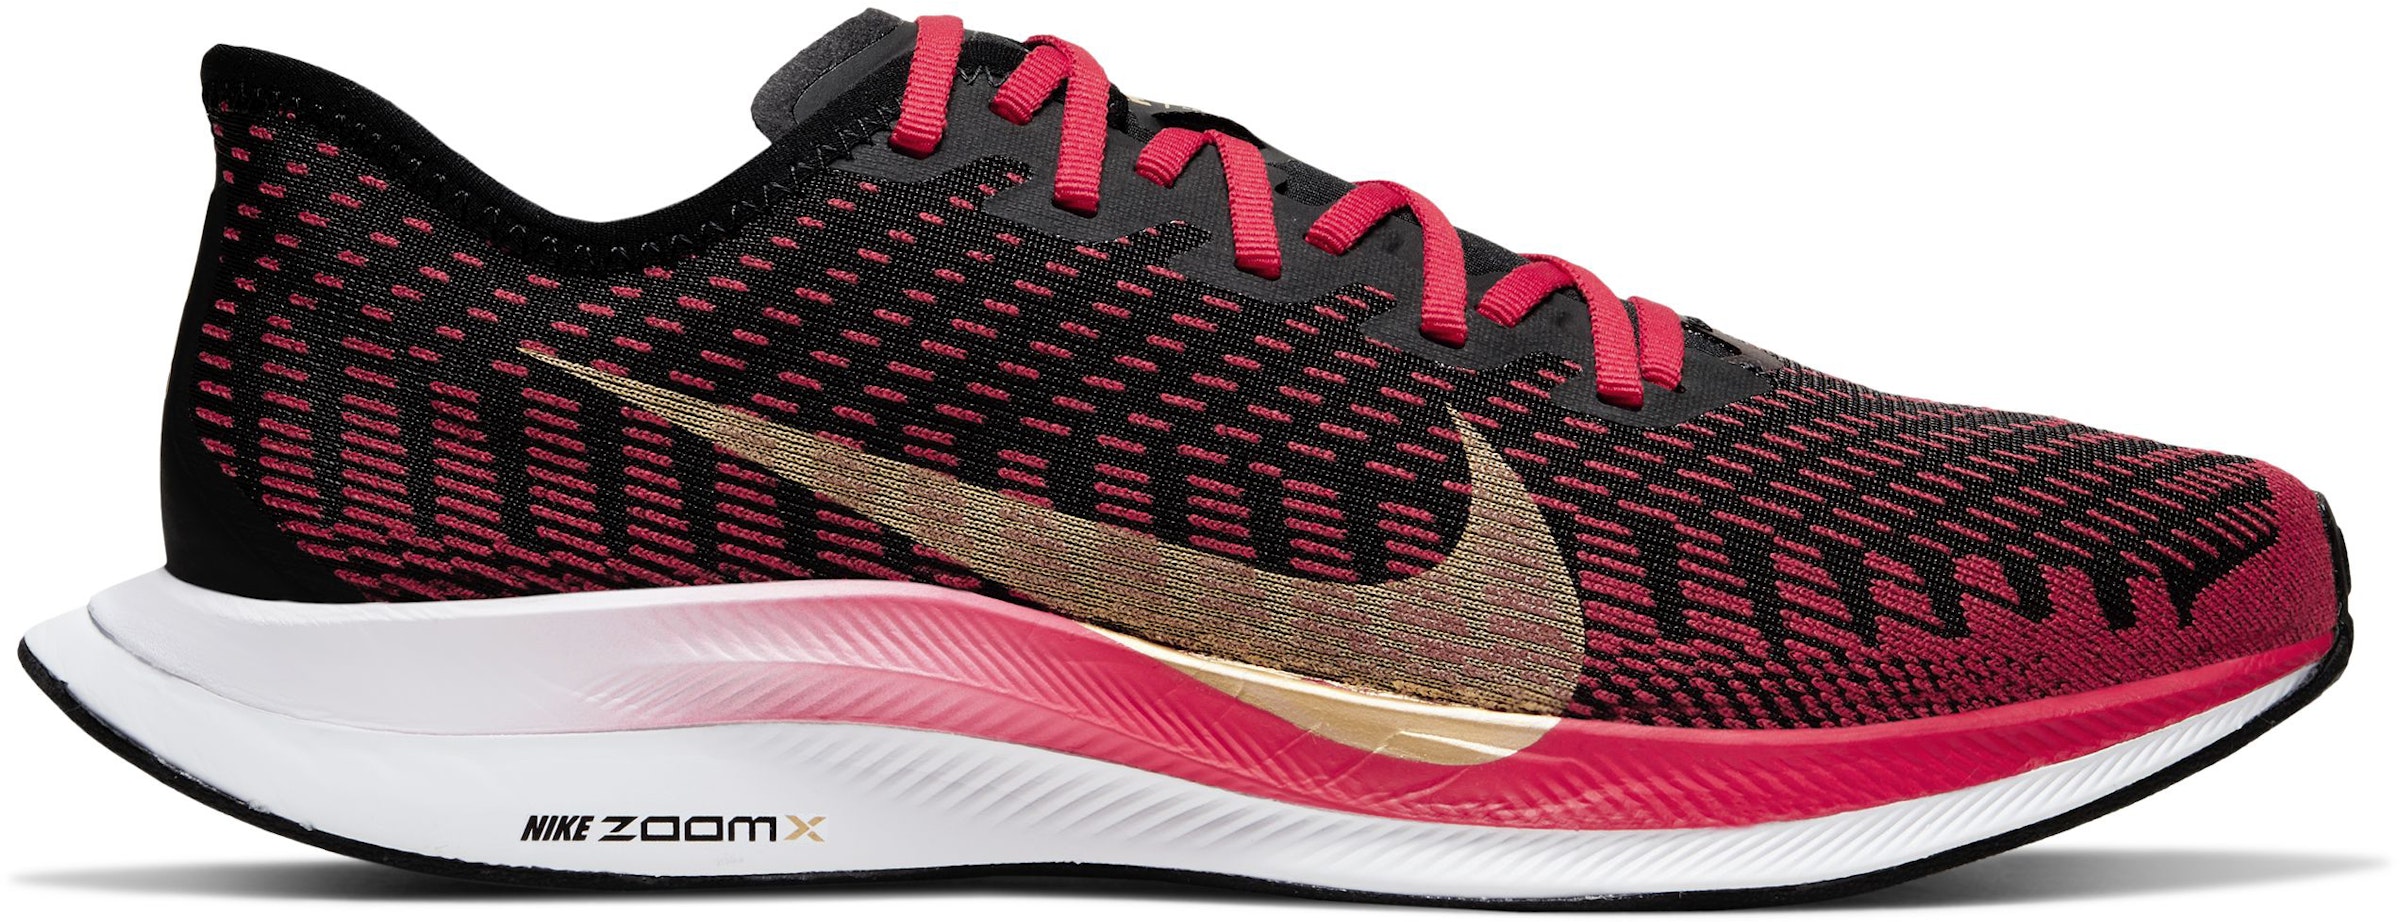 Nike Zoom Turbo Red (Women's) - CU4873-600 -